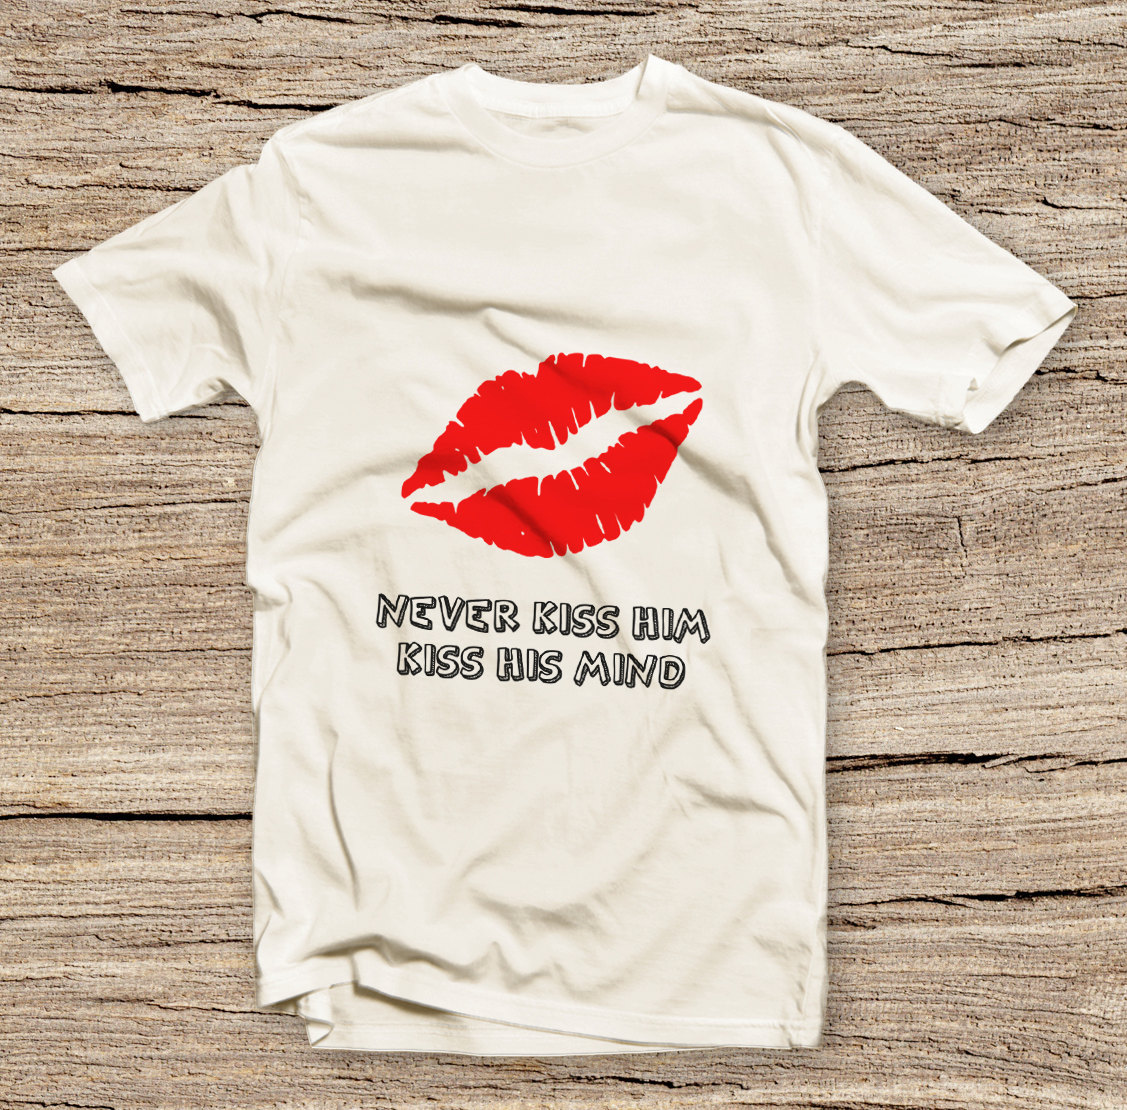 Pts-015 Never Kiss Him, Kiss His Mind Printed T-shirt